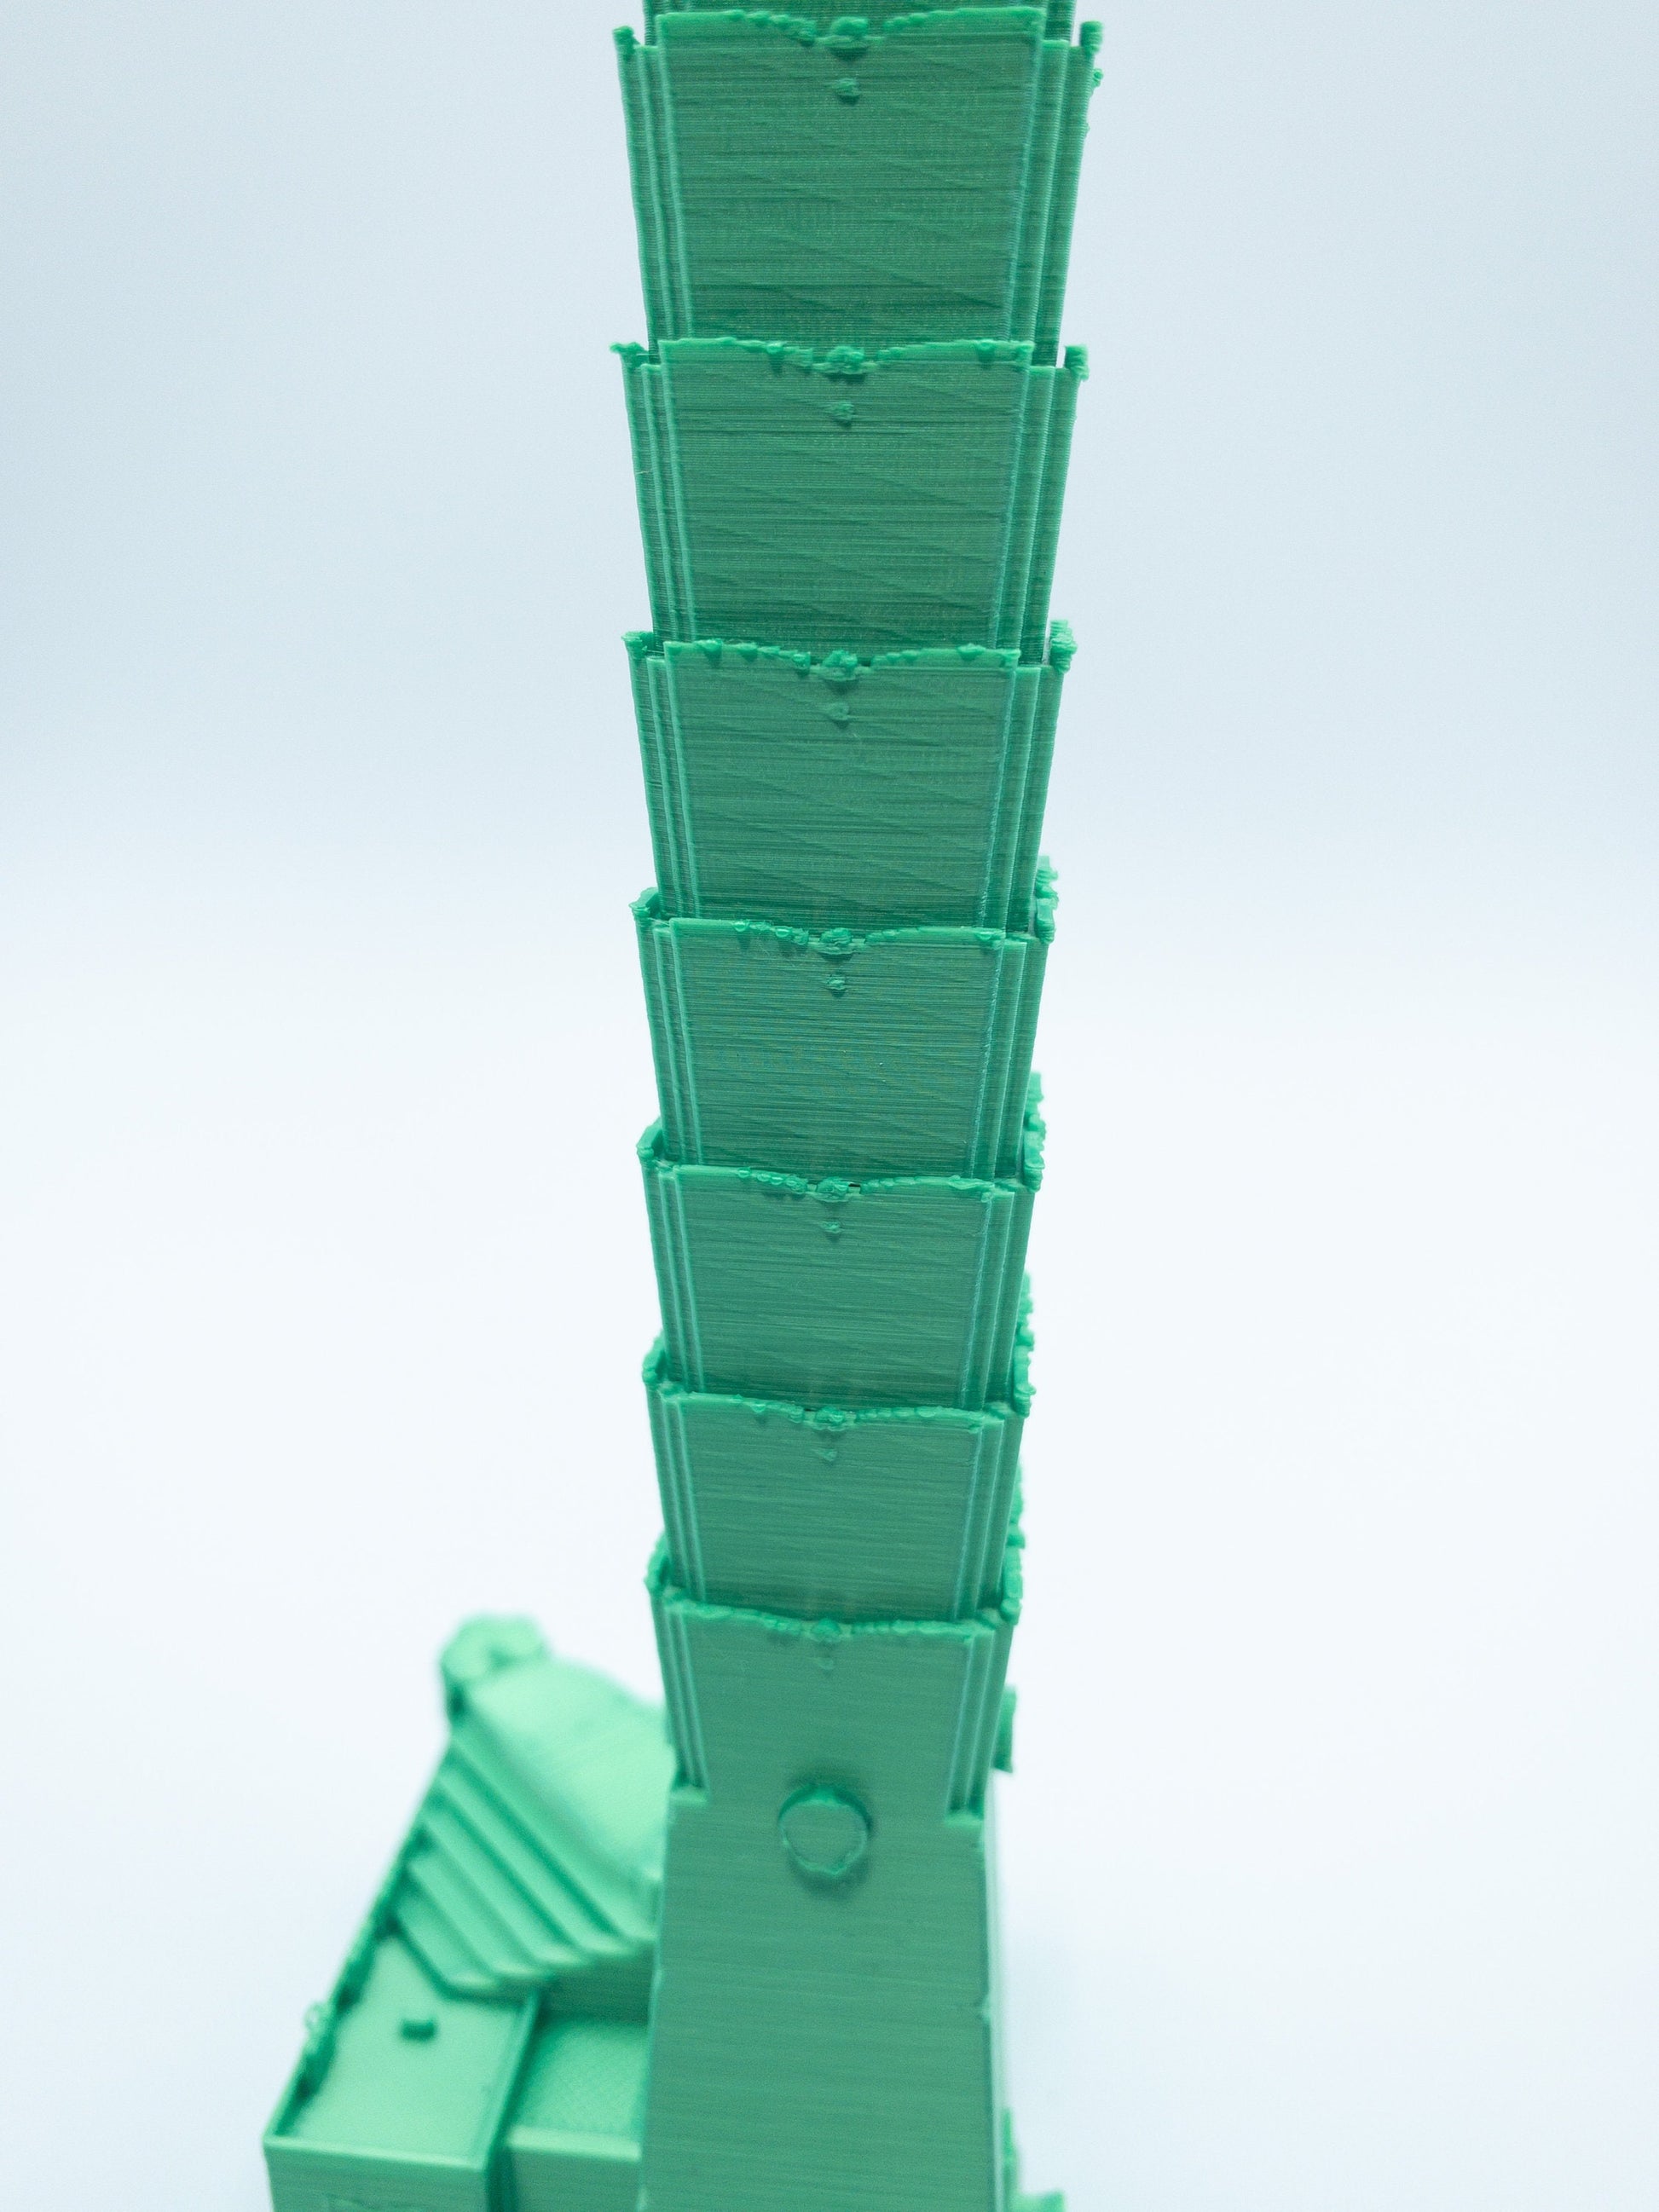 Taipei 101 Model- 3D Printed